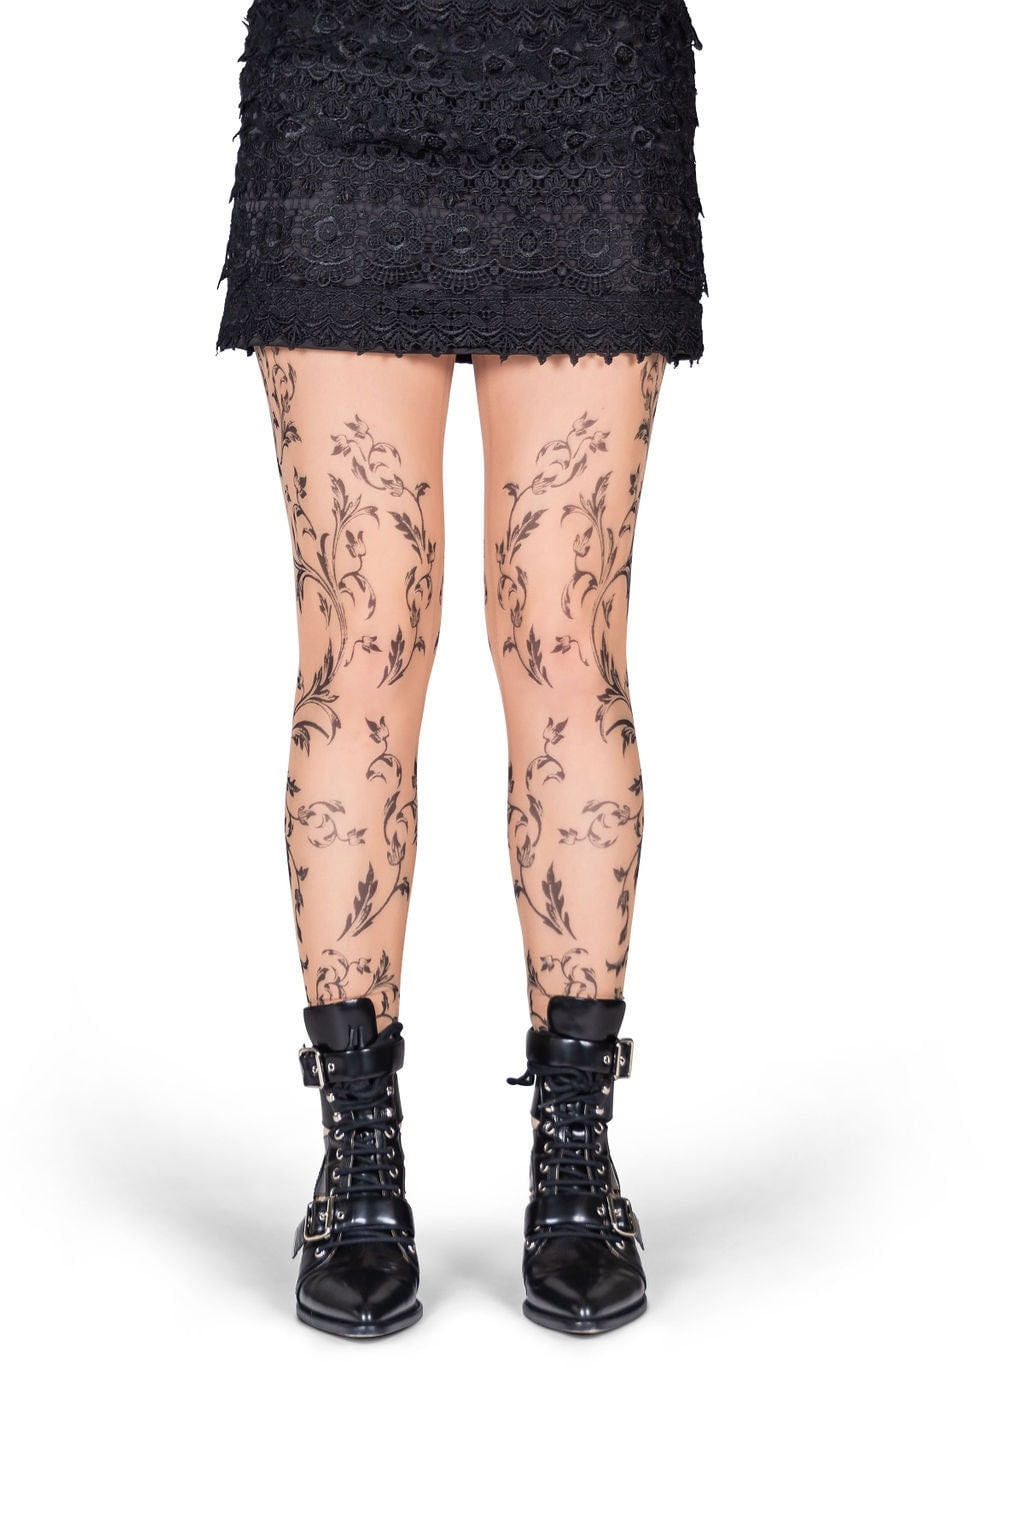 Filigree Fleur-de-Lis Lace Blackwork Tattoo Leggings